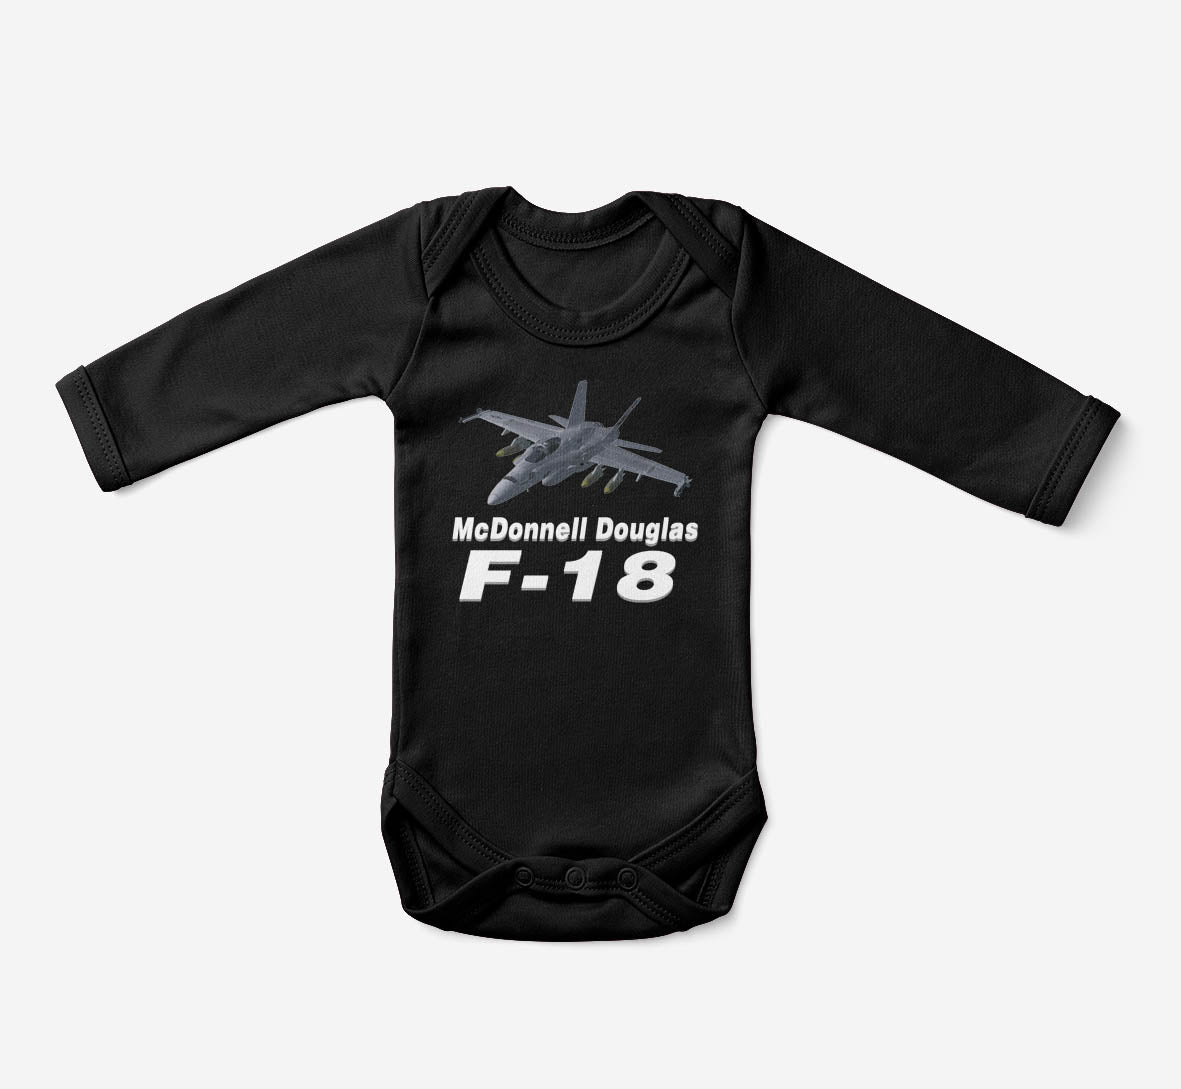 The McDonnell Douglas F18 Designed Baby Bodysuits